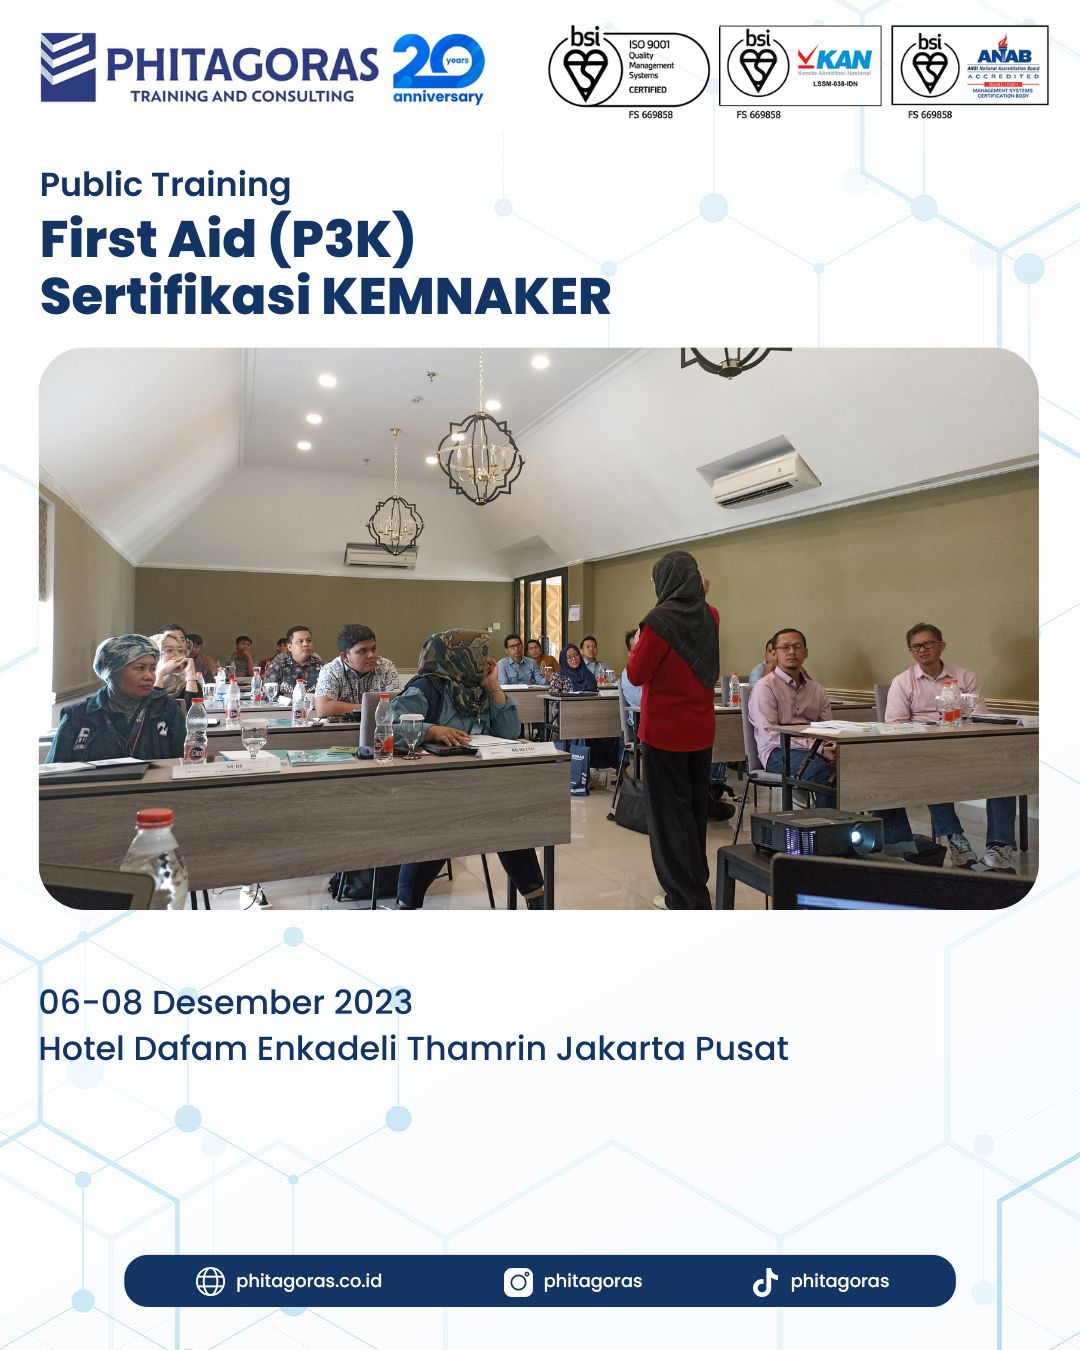 Public Training First Aid (P3K) Sertifikasi KEMNAKER di Hotel Dafam Enkadeli Thamrin Jakarta Pusat